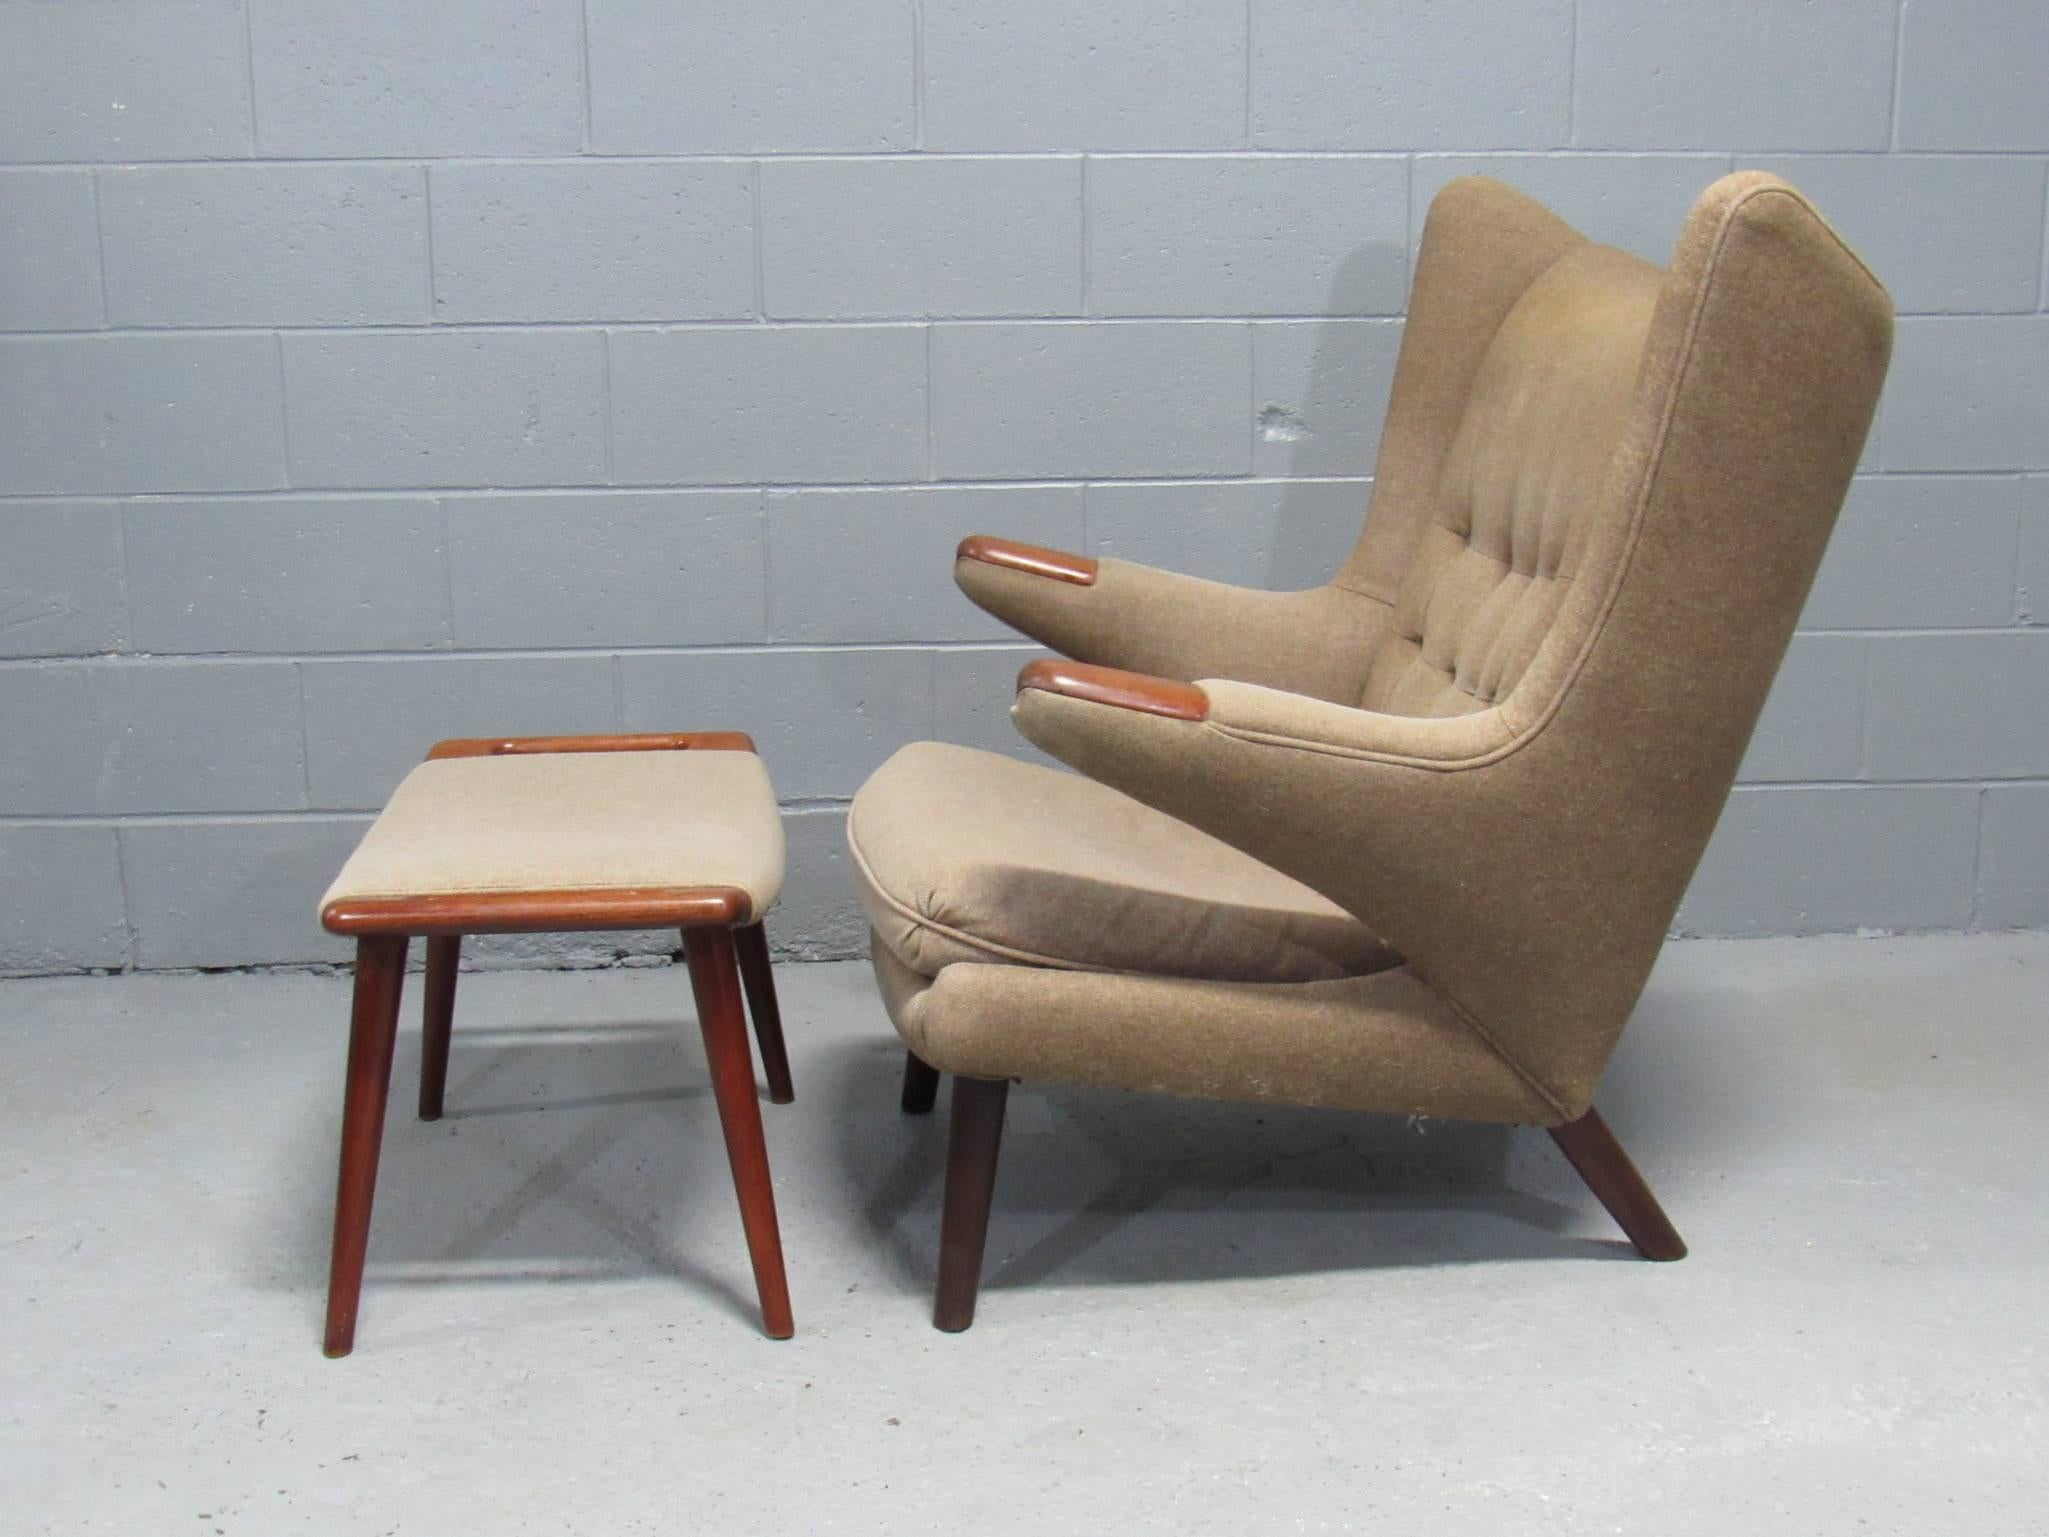 20th Century 1950s Papa Bear Chair and Ottoman Model AP-19 by Hans Wegner for AP Stolen